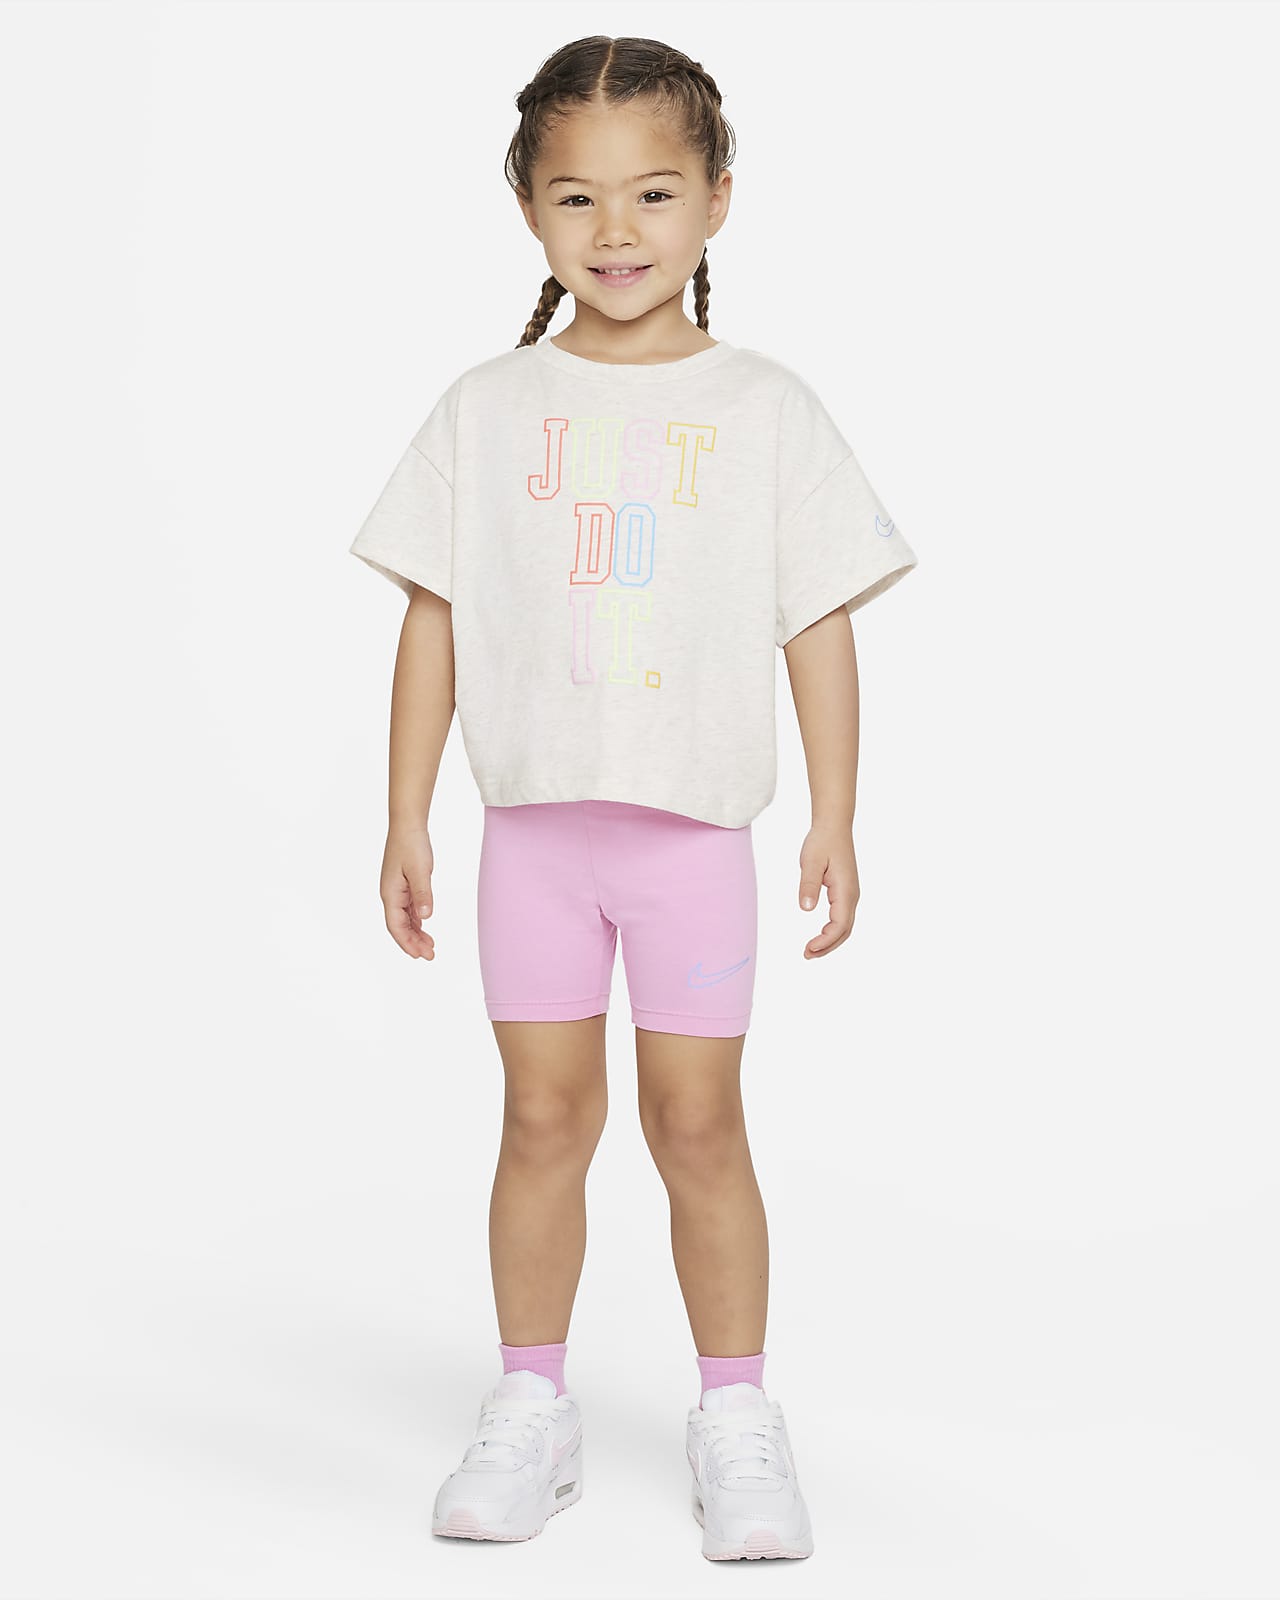 Perforación Pertenecer a Caña Nike Conjunto de camiseta y pantalón corto - Bebé e infantil. Nike ES